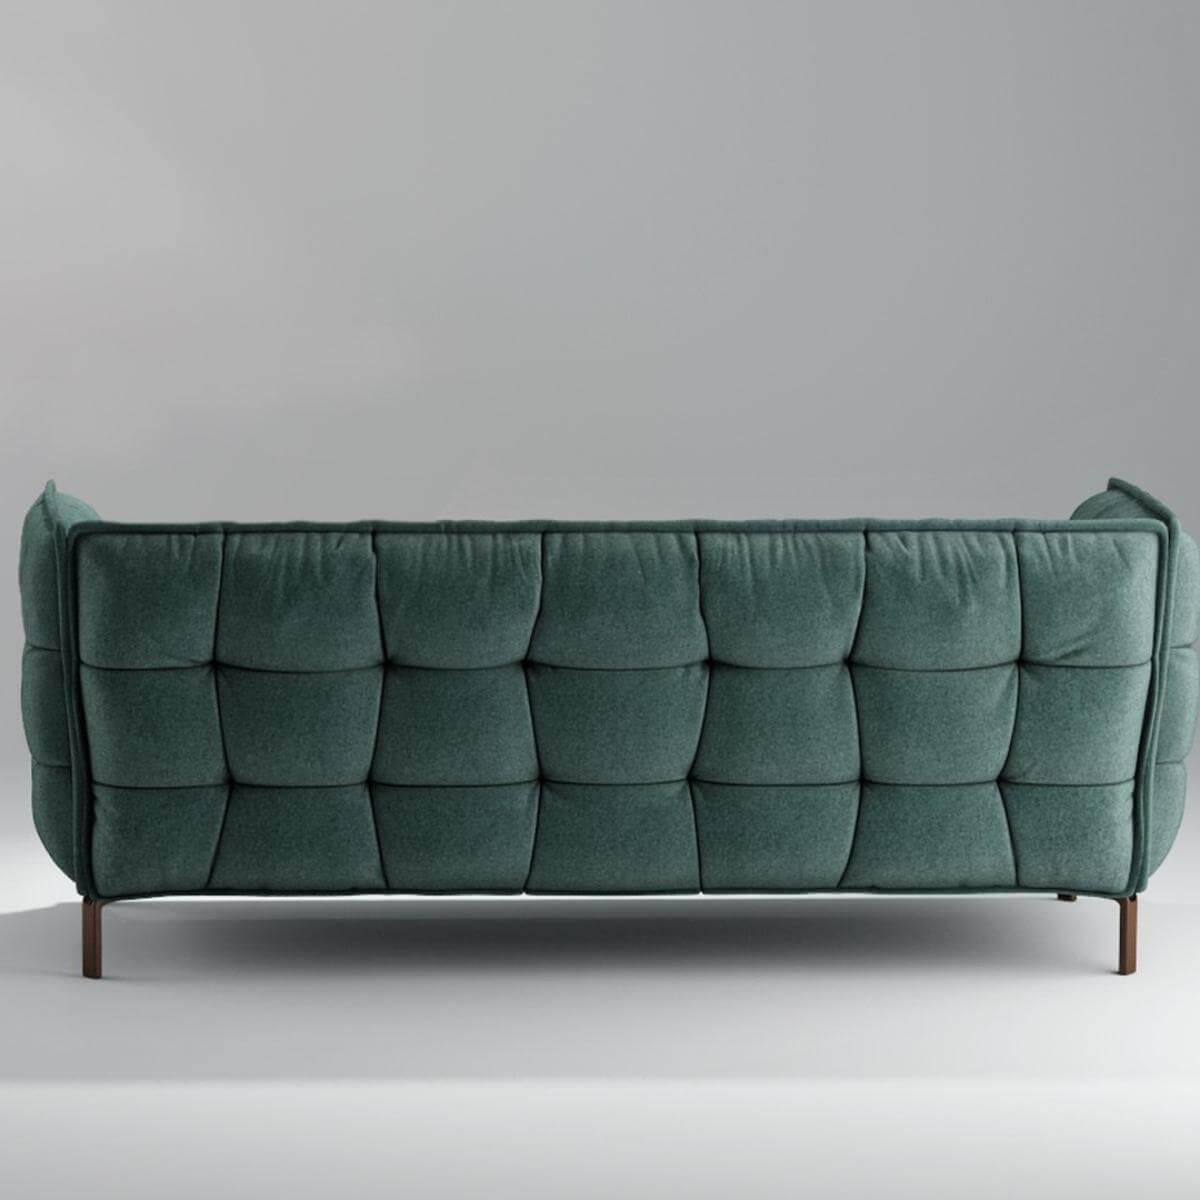 AeroLuxe Cotton Linen Sofa: A Luxurious and Comfortable Sofa for Any Home